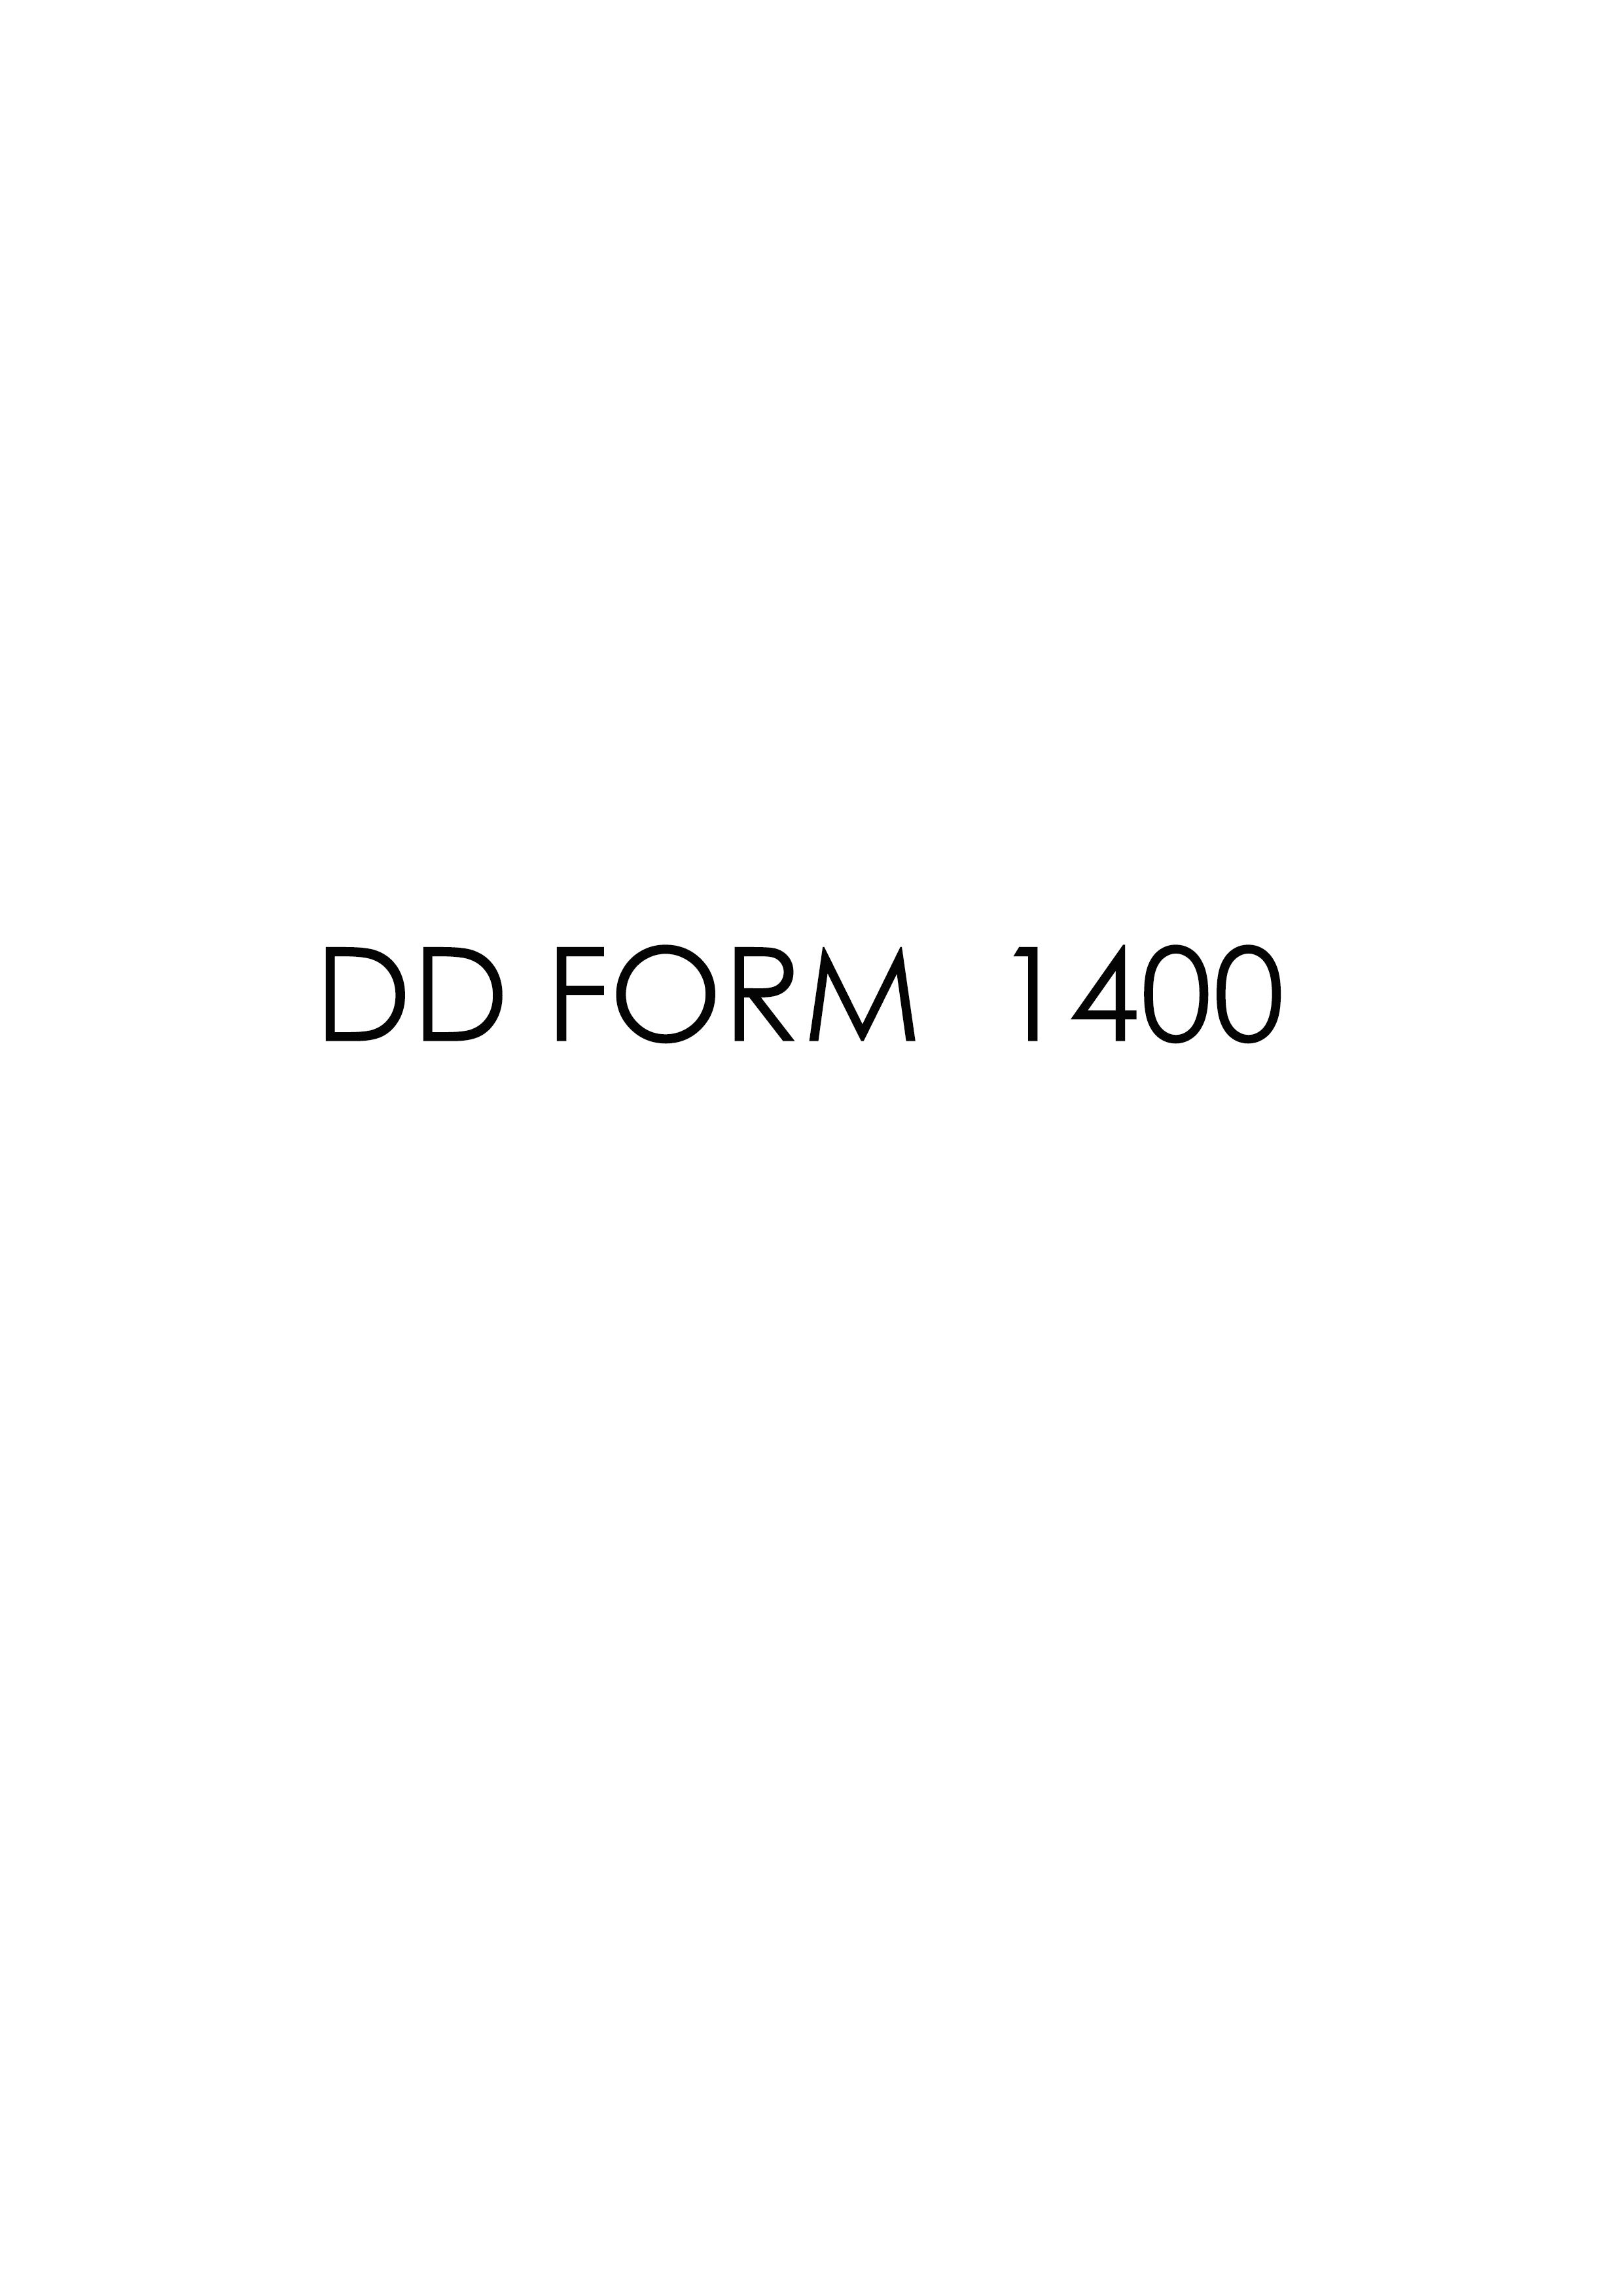 Download dd form 1400